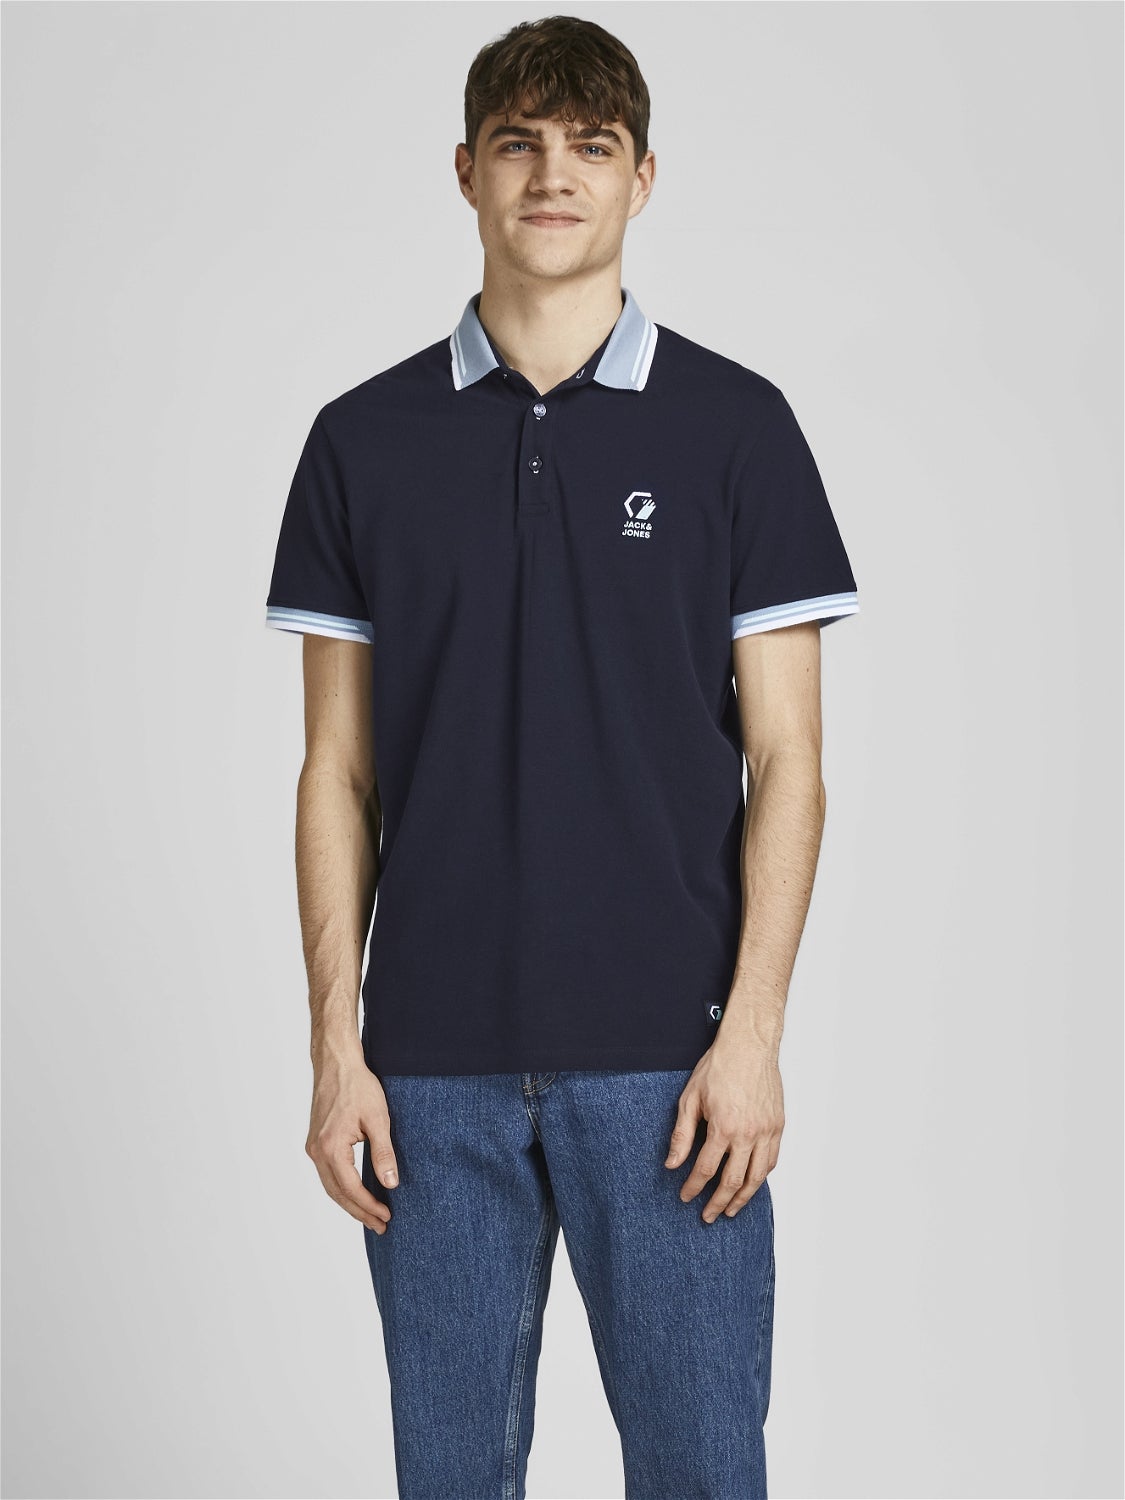 Rabatt 58 % HERREN Hemden & T-Shirts Print Jack & Jones Poloshirt Blau/Grau XL 